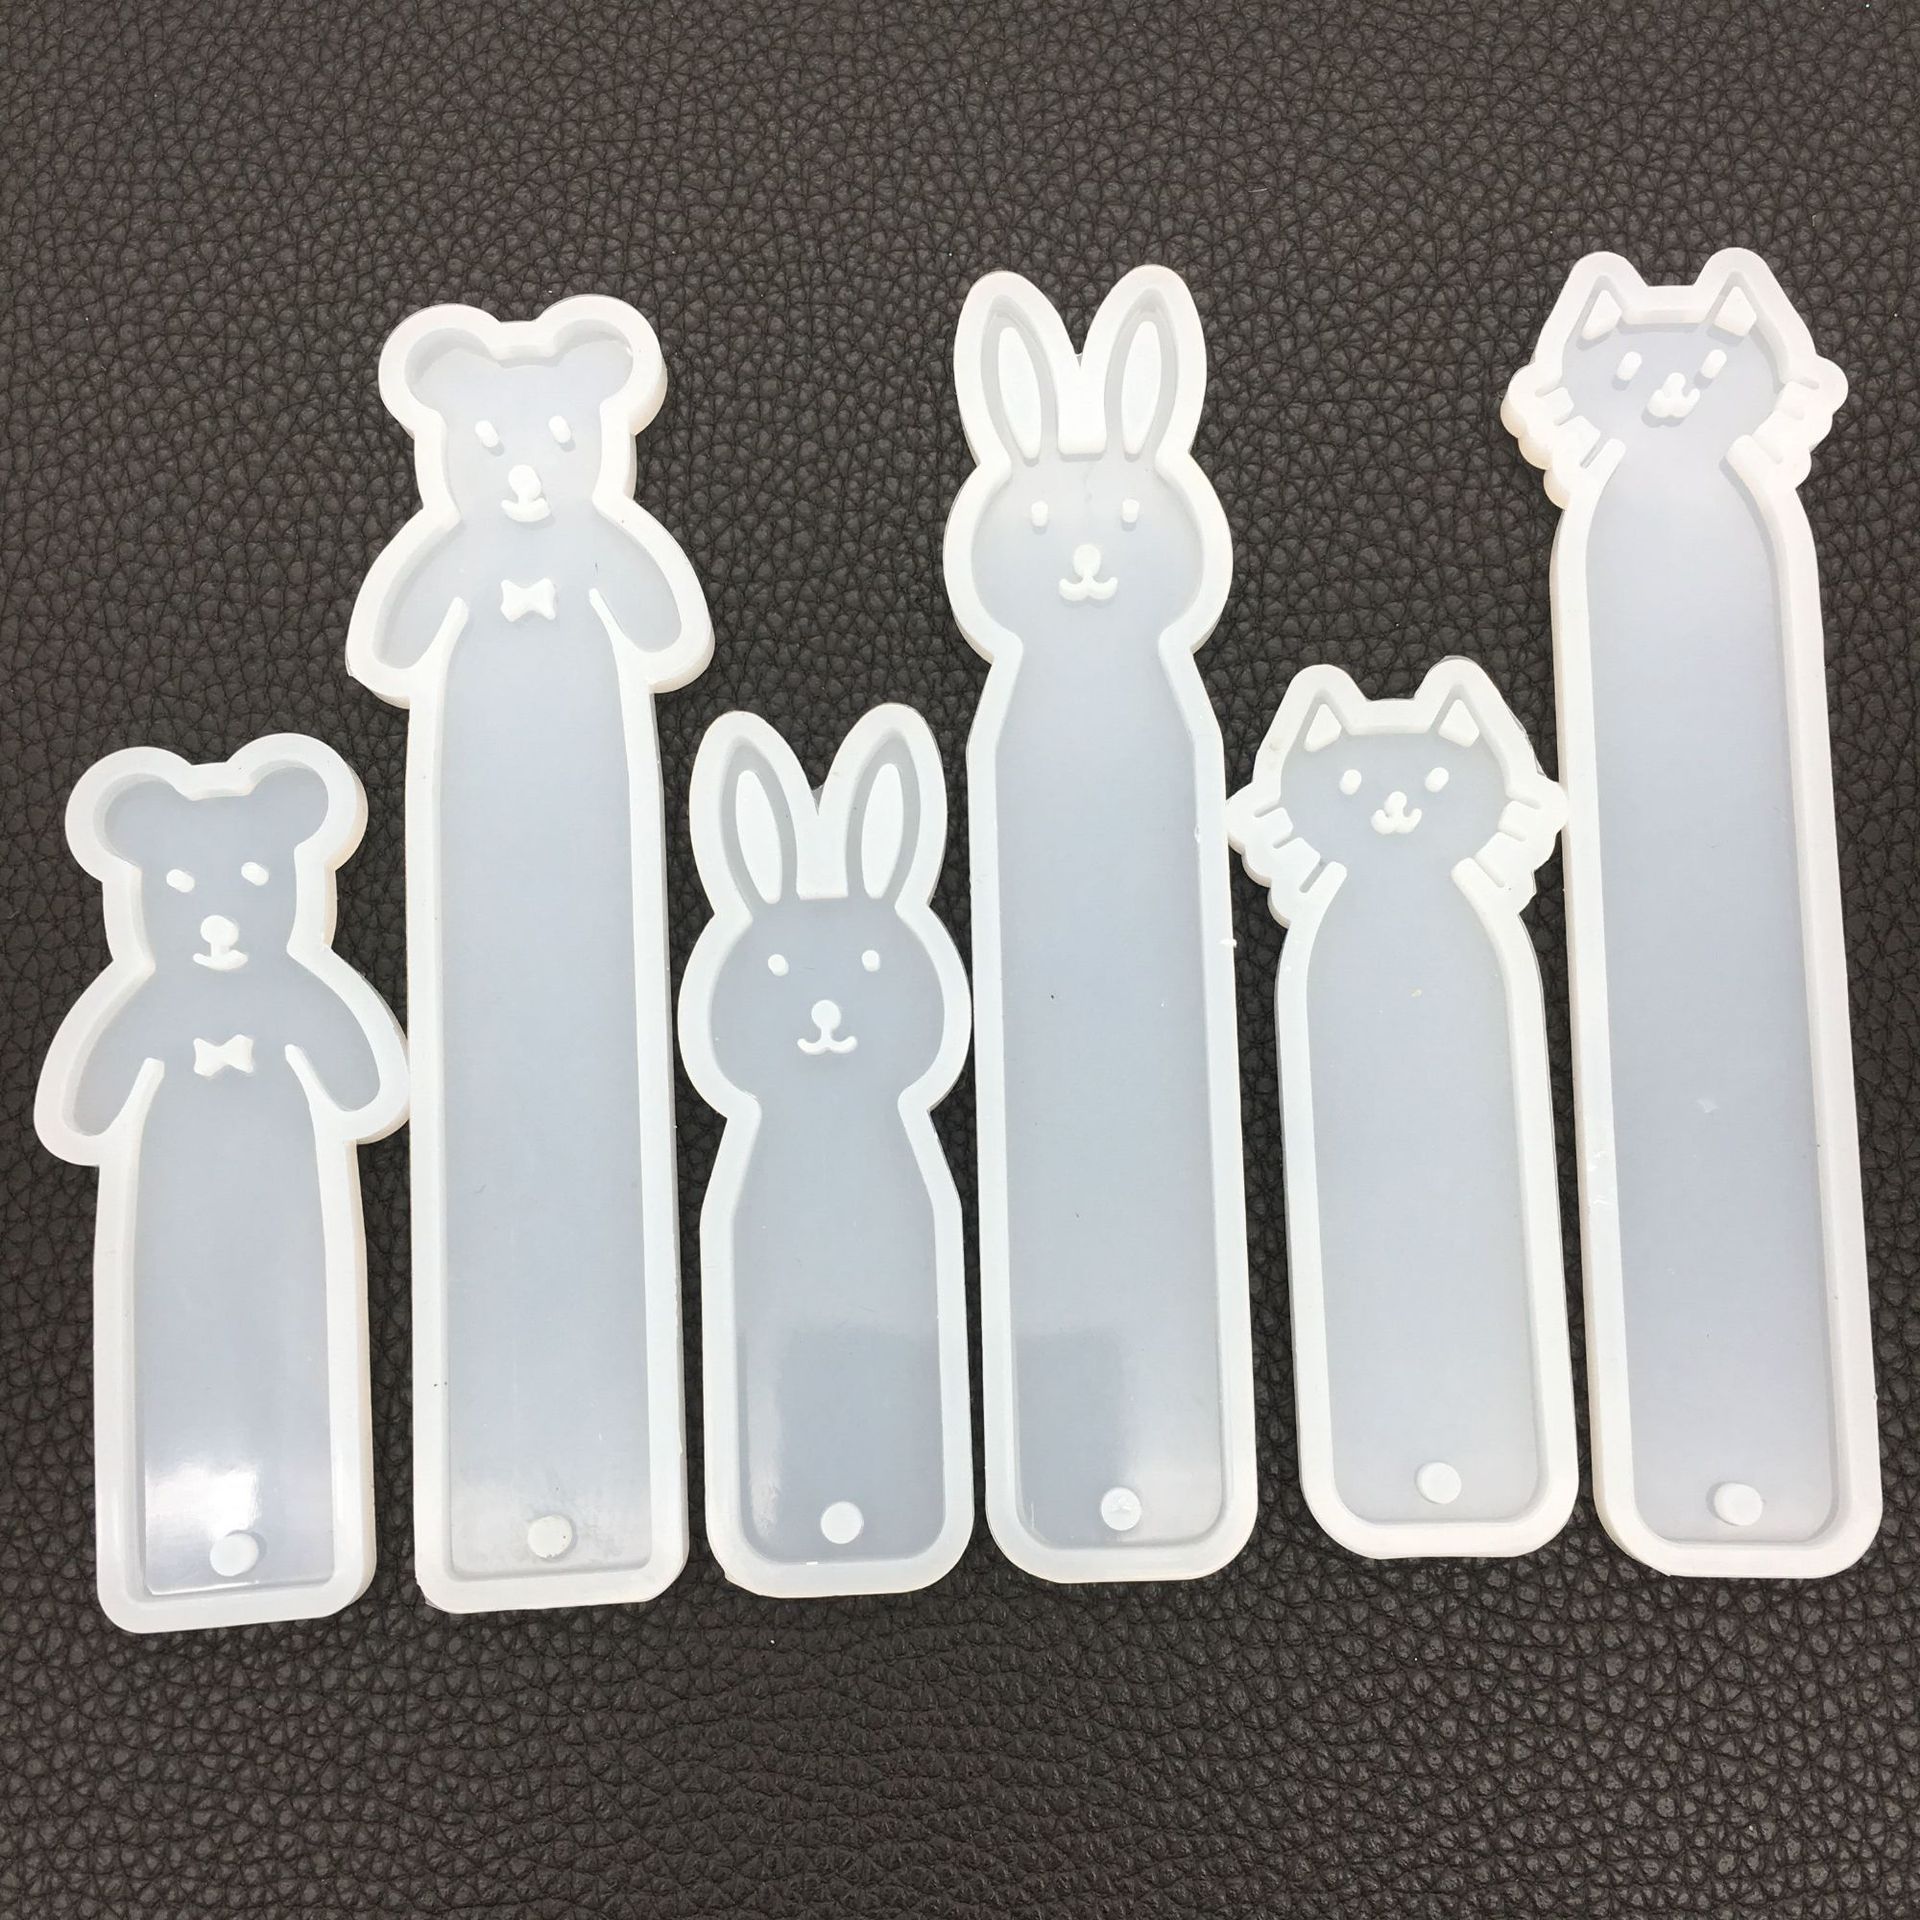 Silicone Mold Diy Bookmark Cute Rabbit Mirror Crafts Jewelry